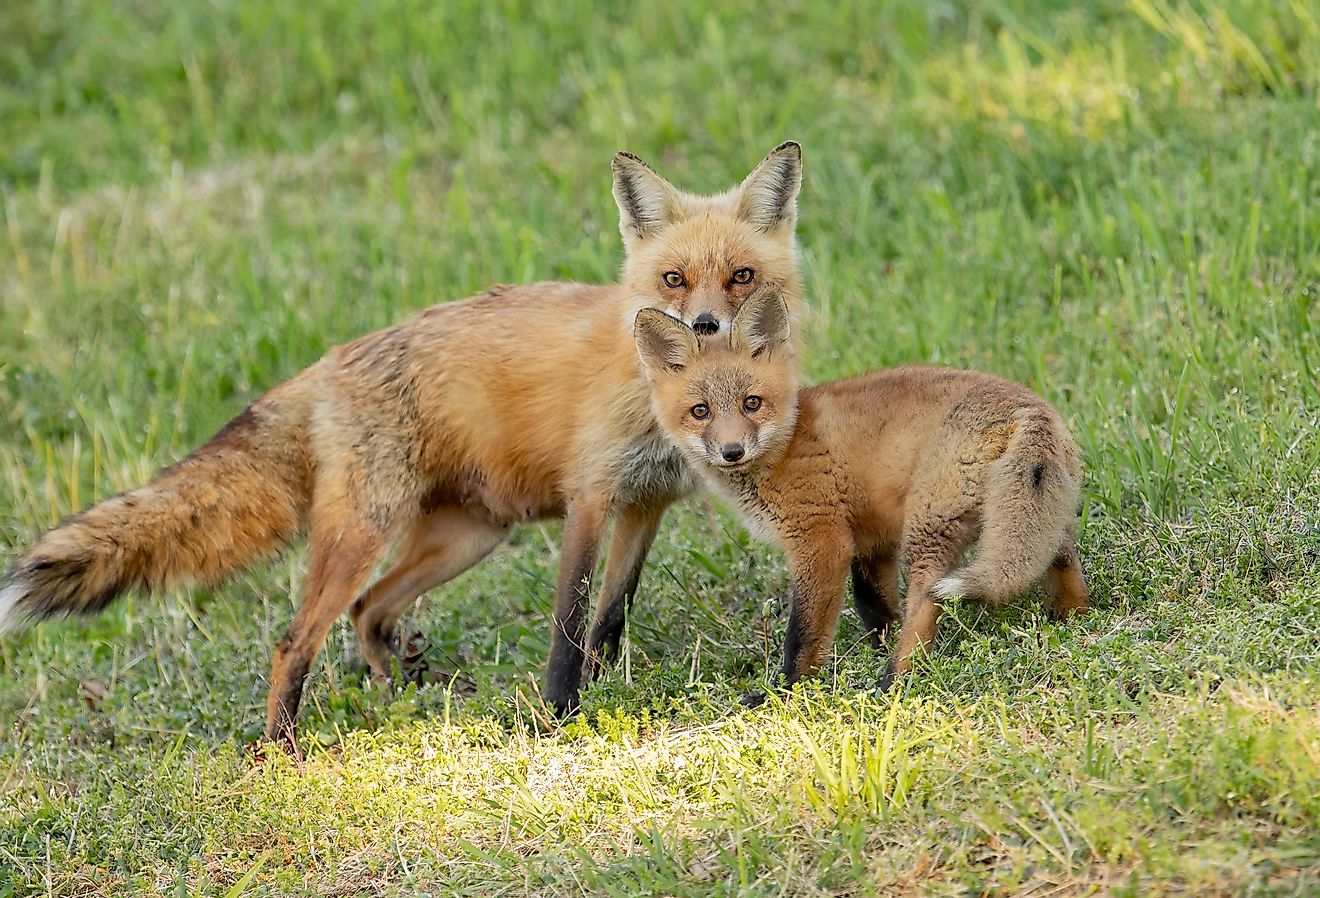 A red fox in Pennsylvania.